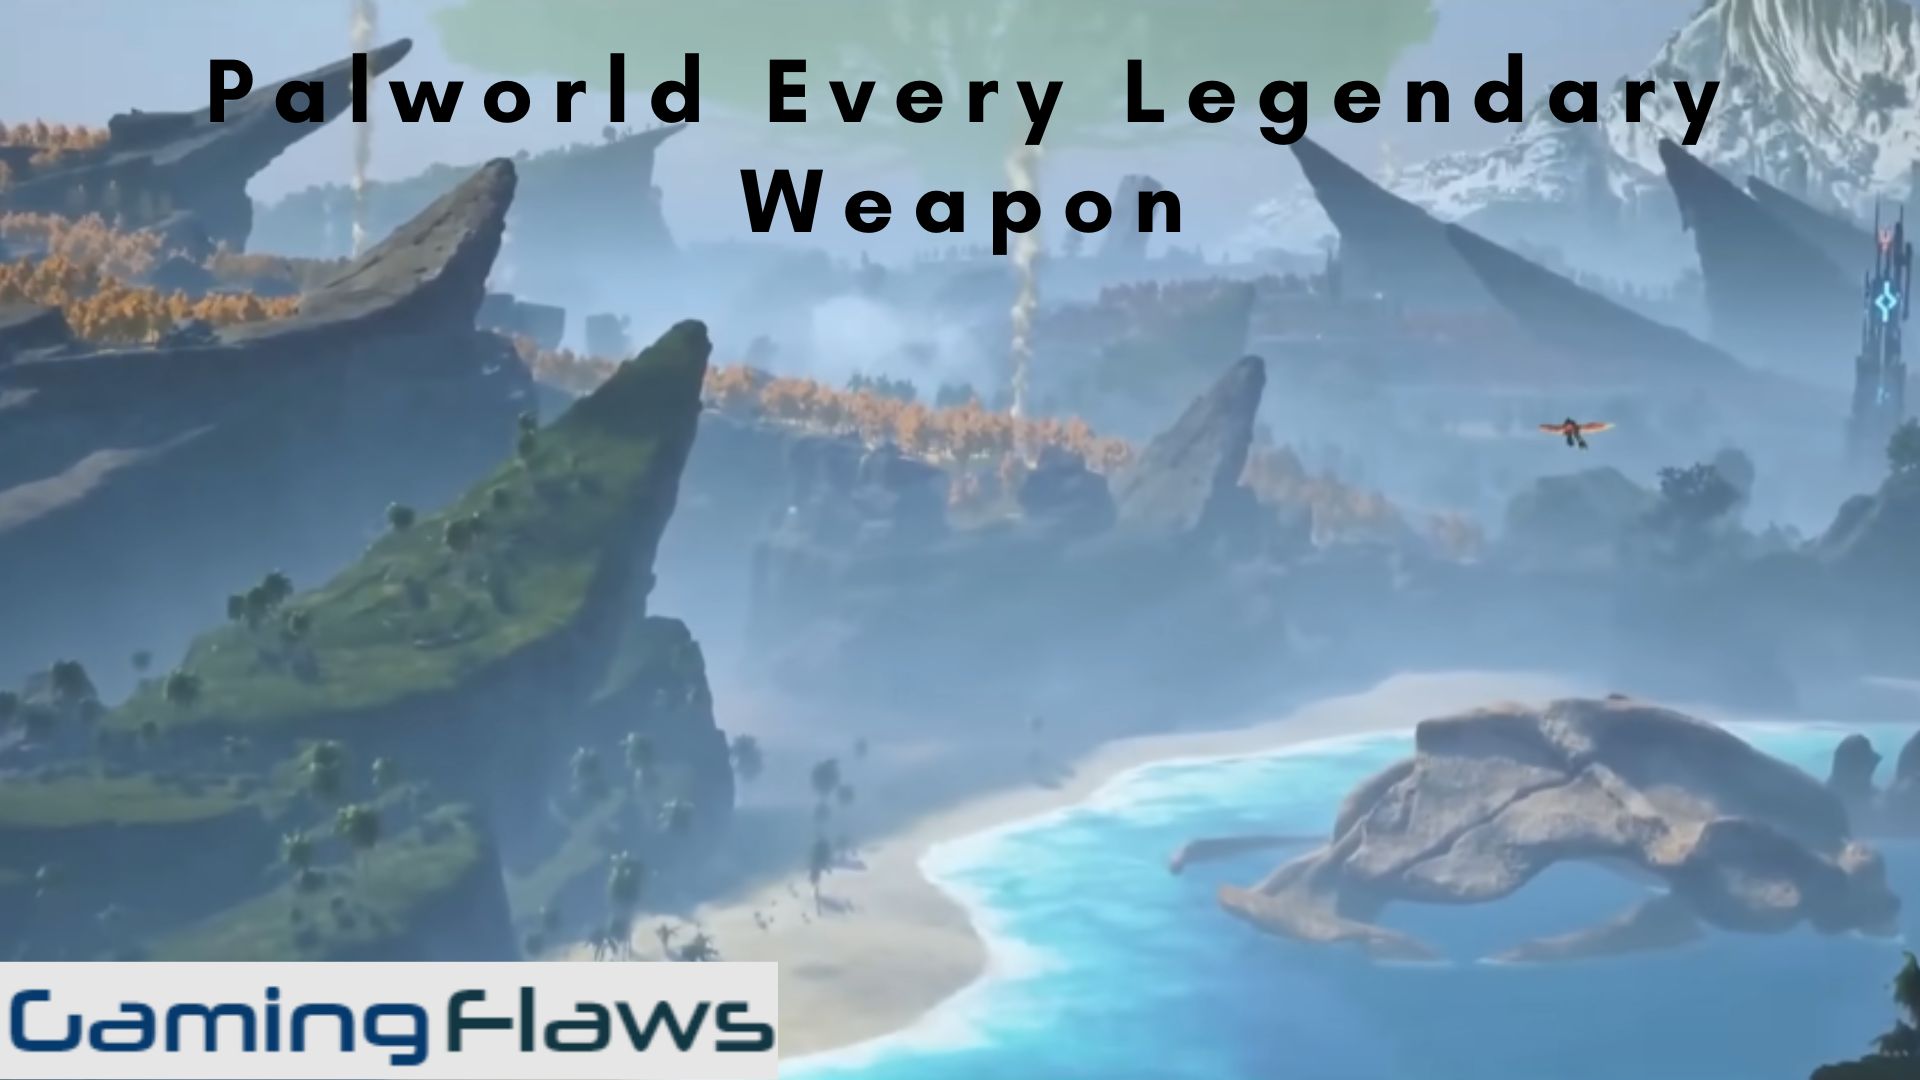 Palworld Every Legendary Weapon